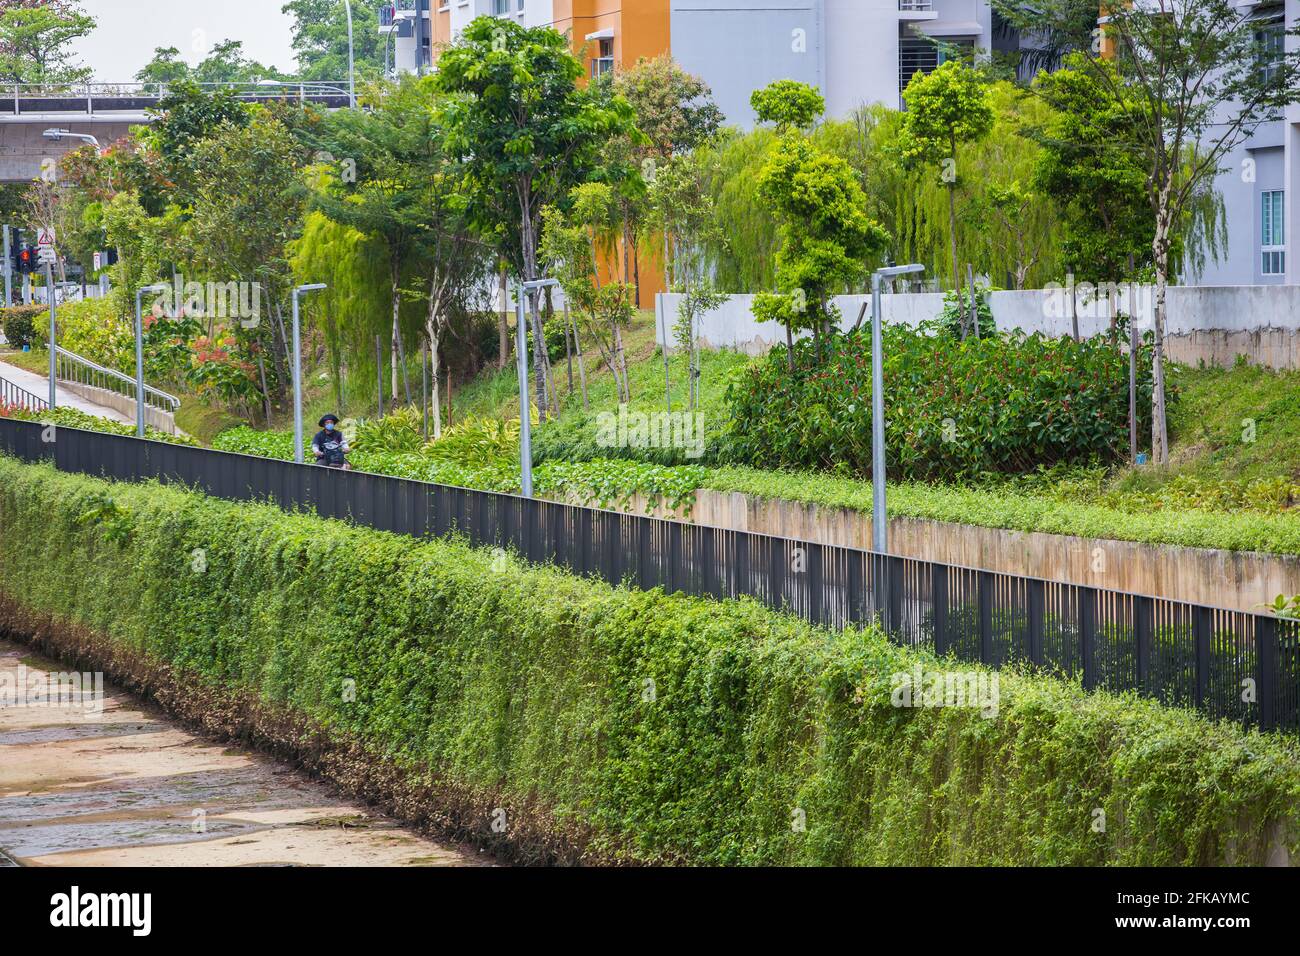 Neighbourhood park facility with enchanting lush greenery. Singapore. Stock Photo